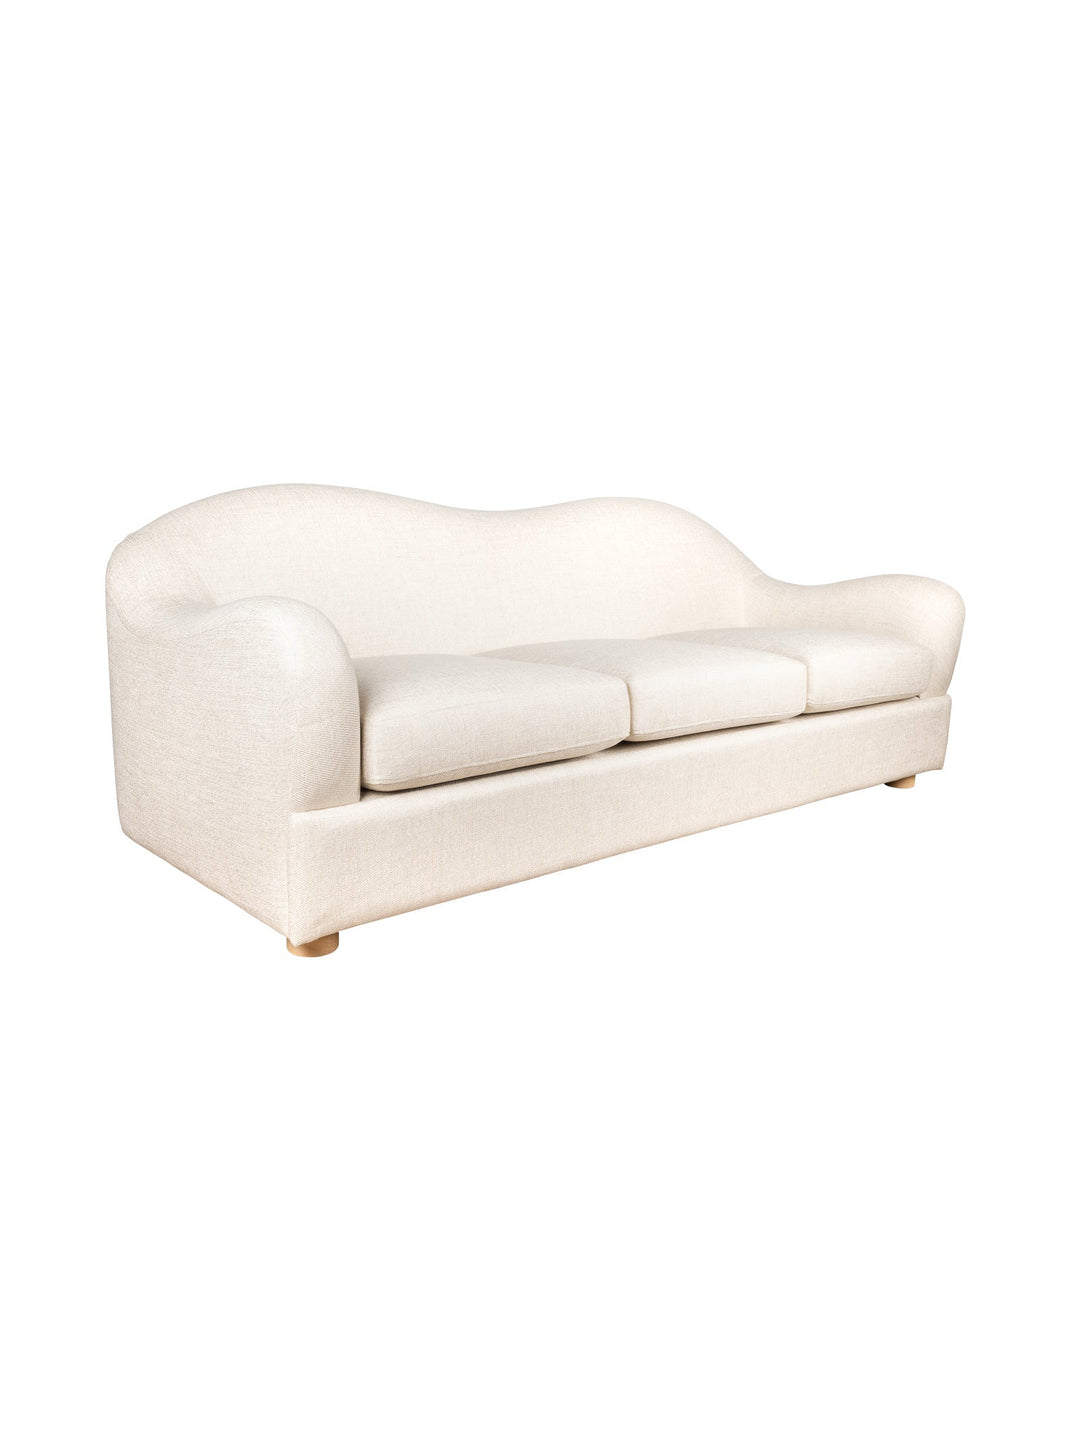 Dunes 3-Seater Sofa in Vapoury Sandstone - Hertex Haus Online - Furniture